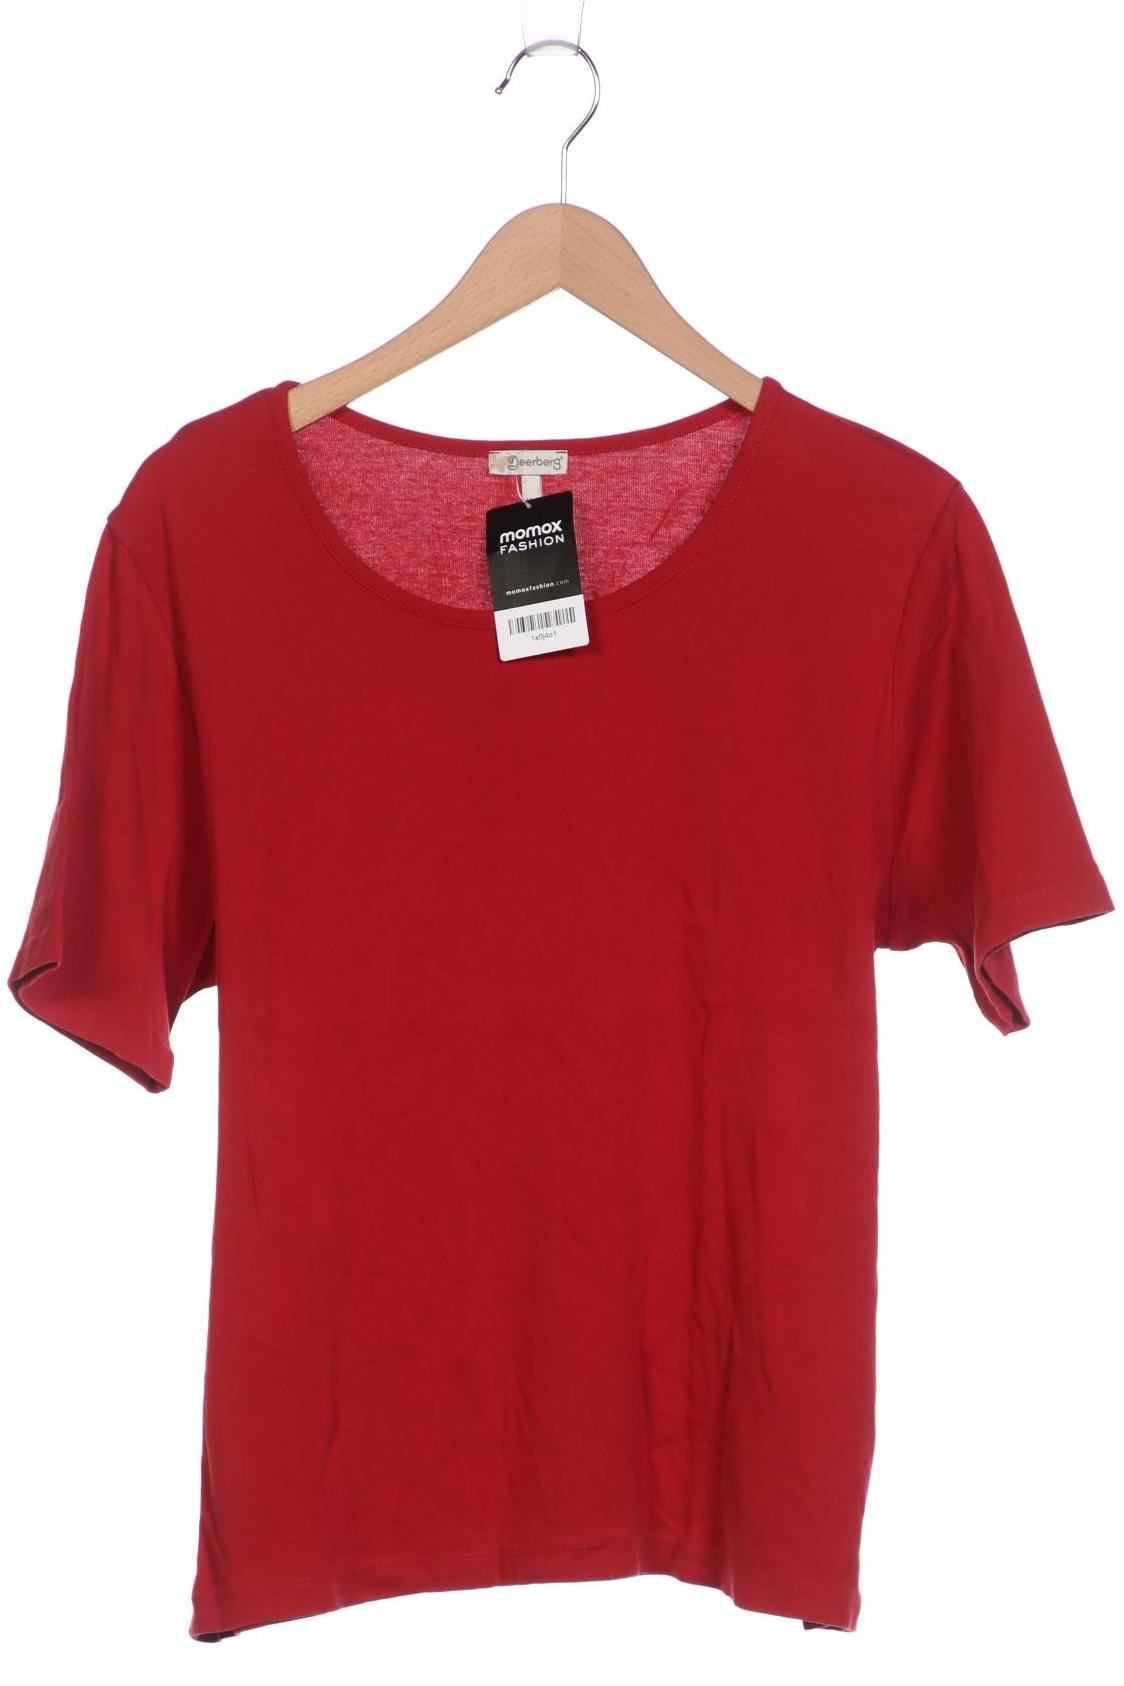 Deerberg Damen T-Shirt, rot von Deerberg